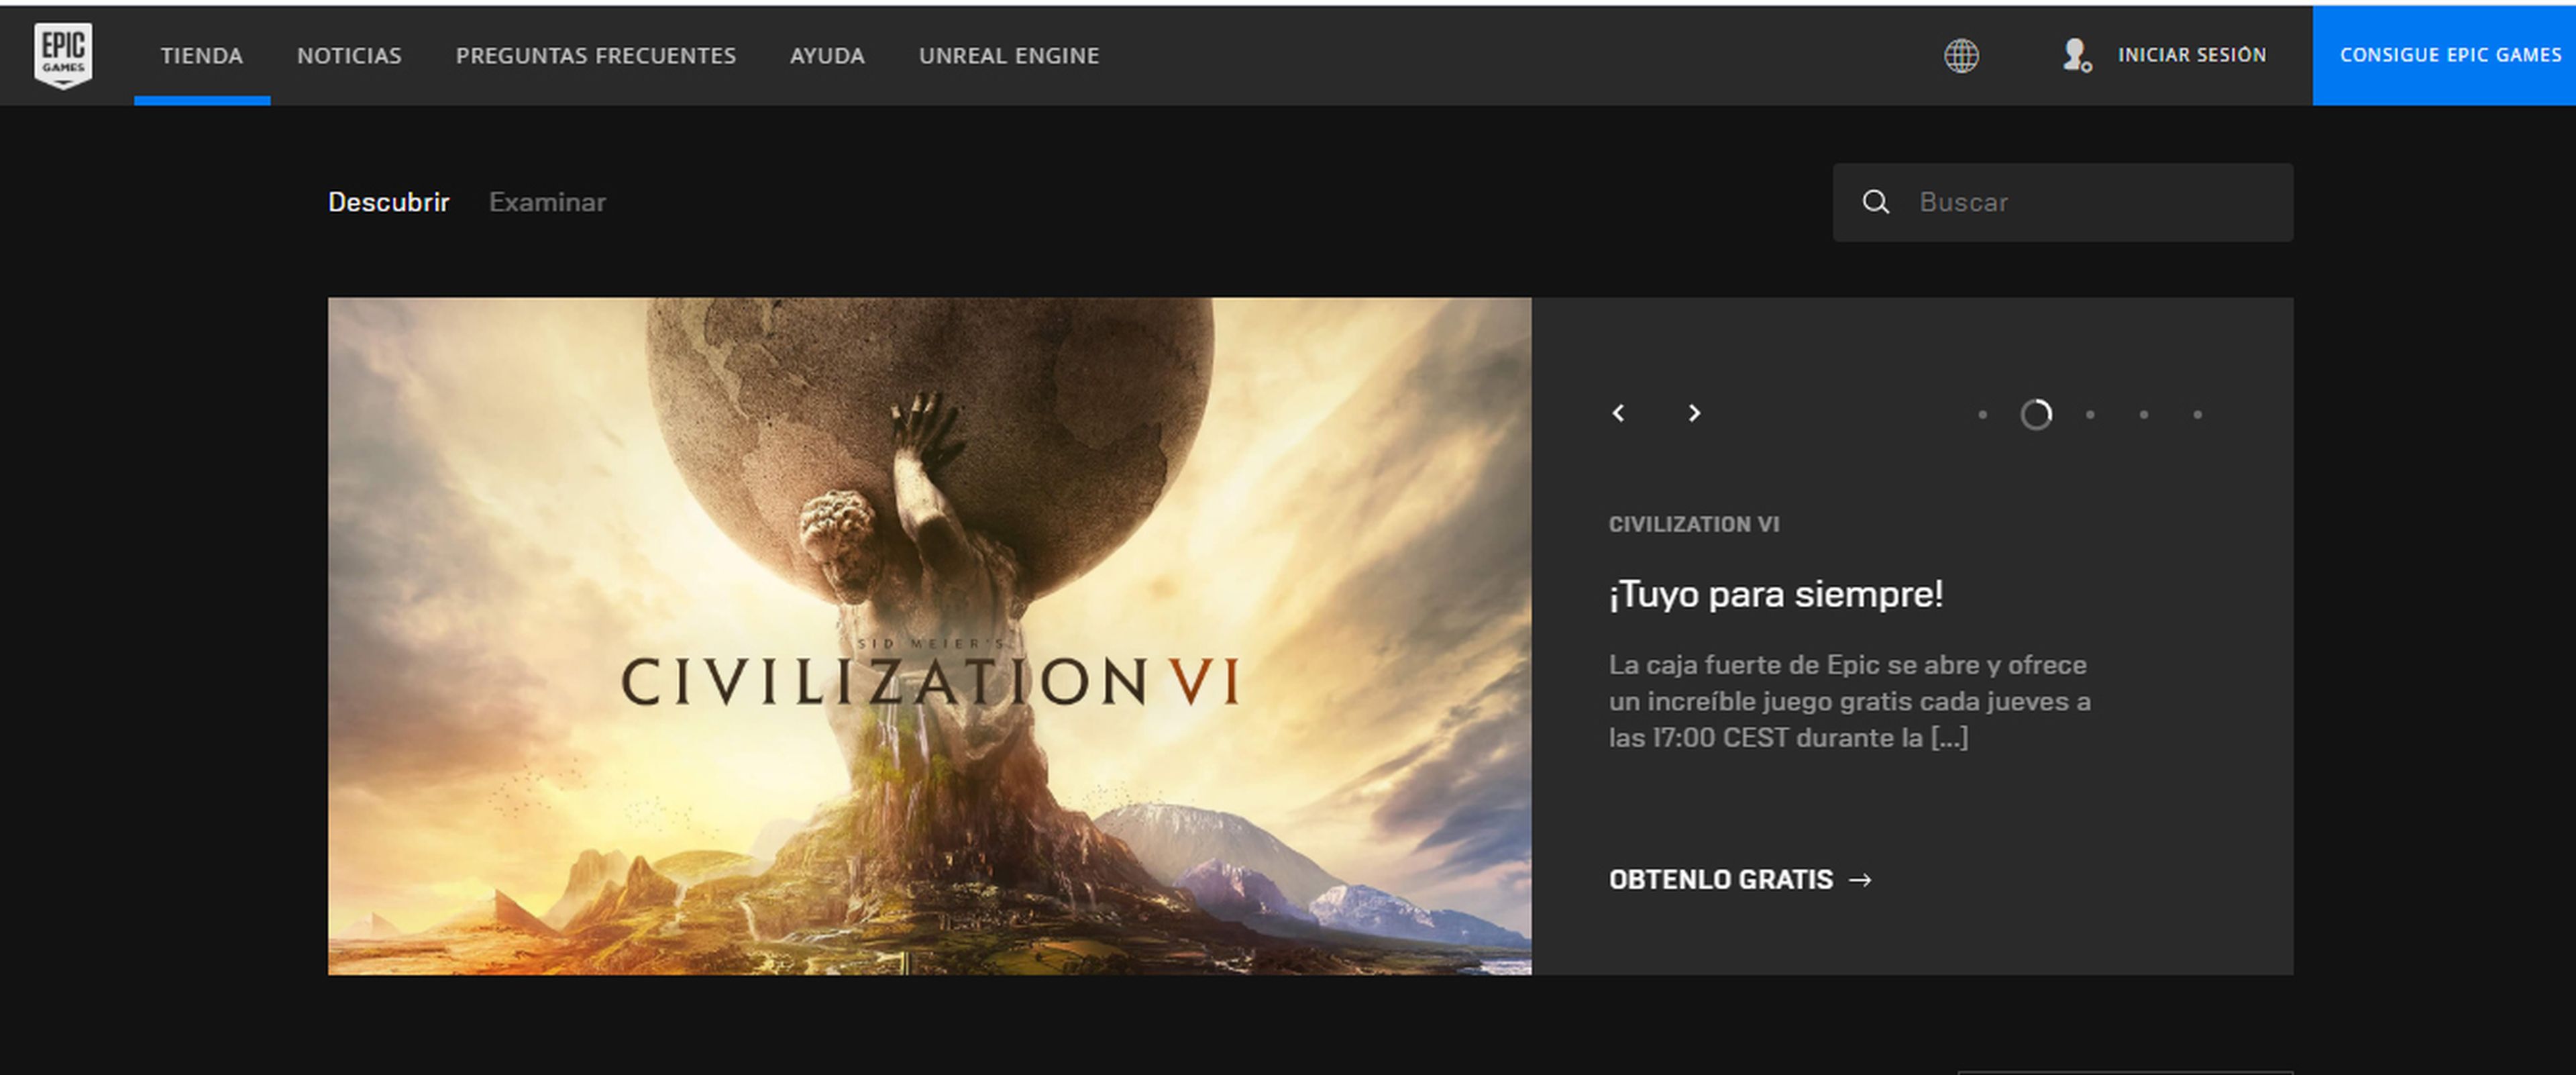 Civilization VI Epic Games